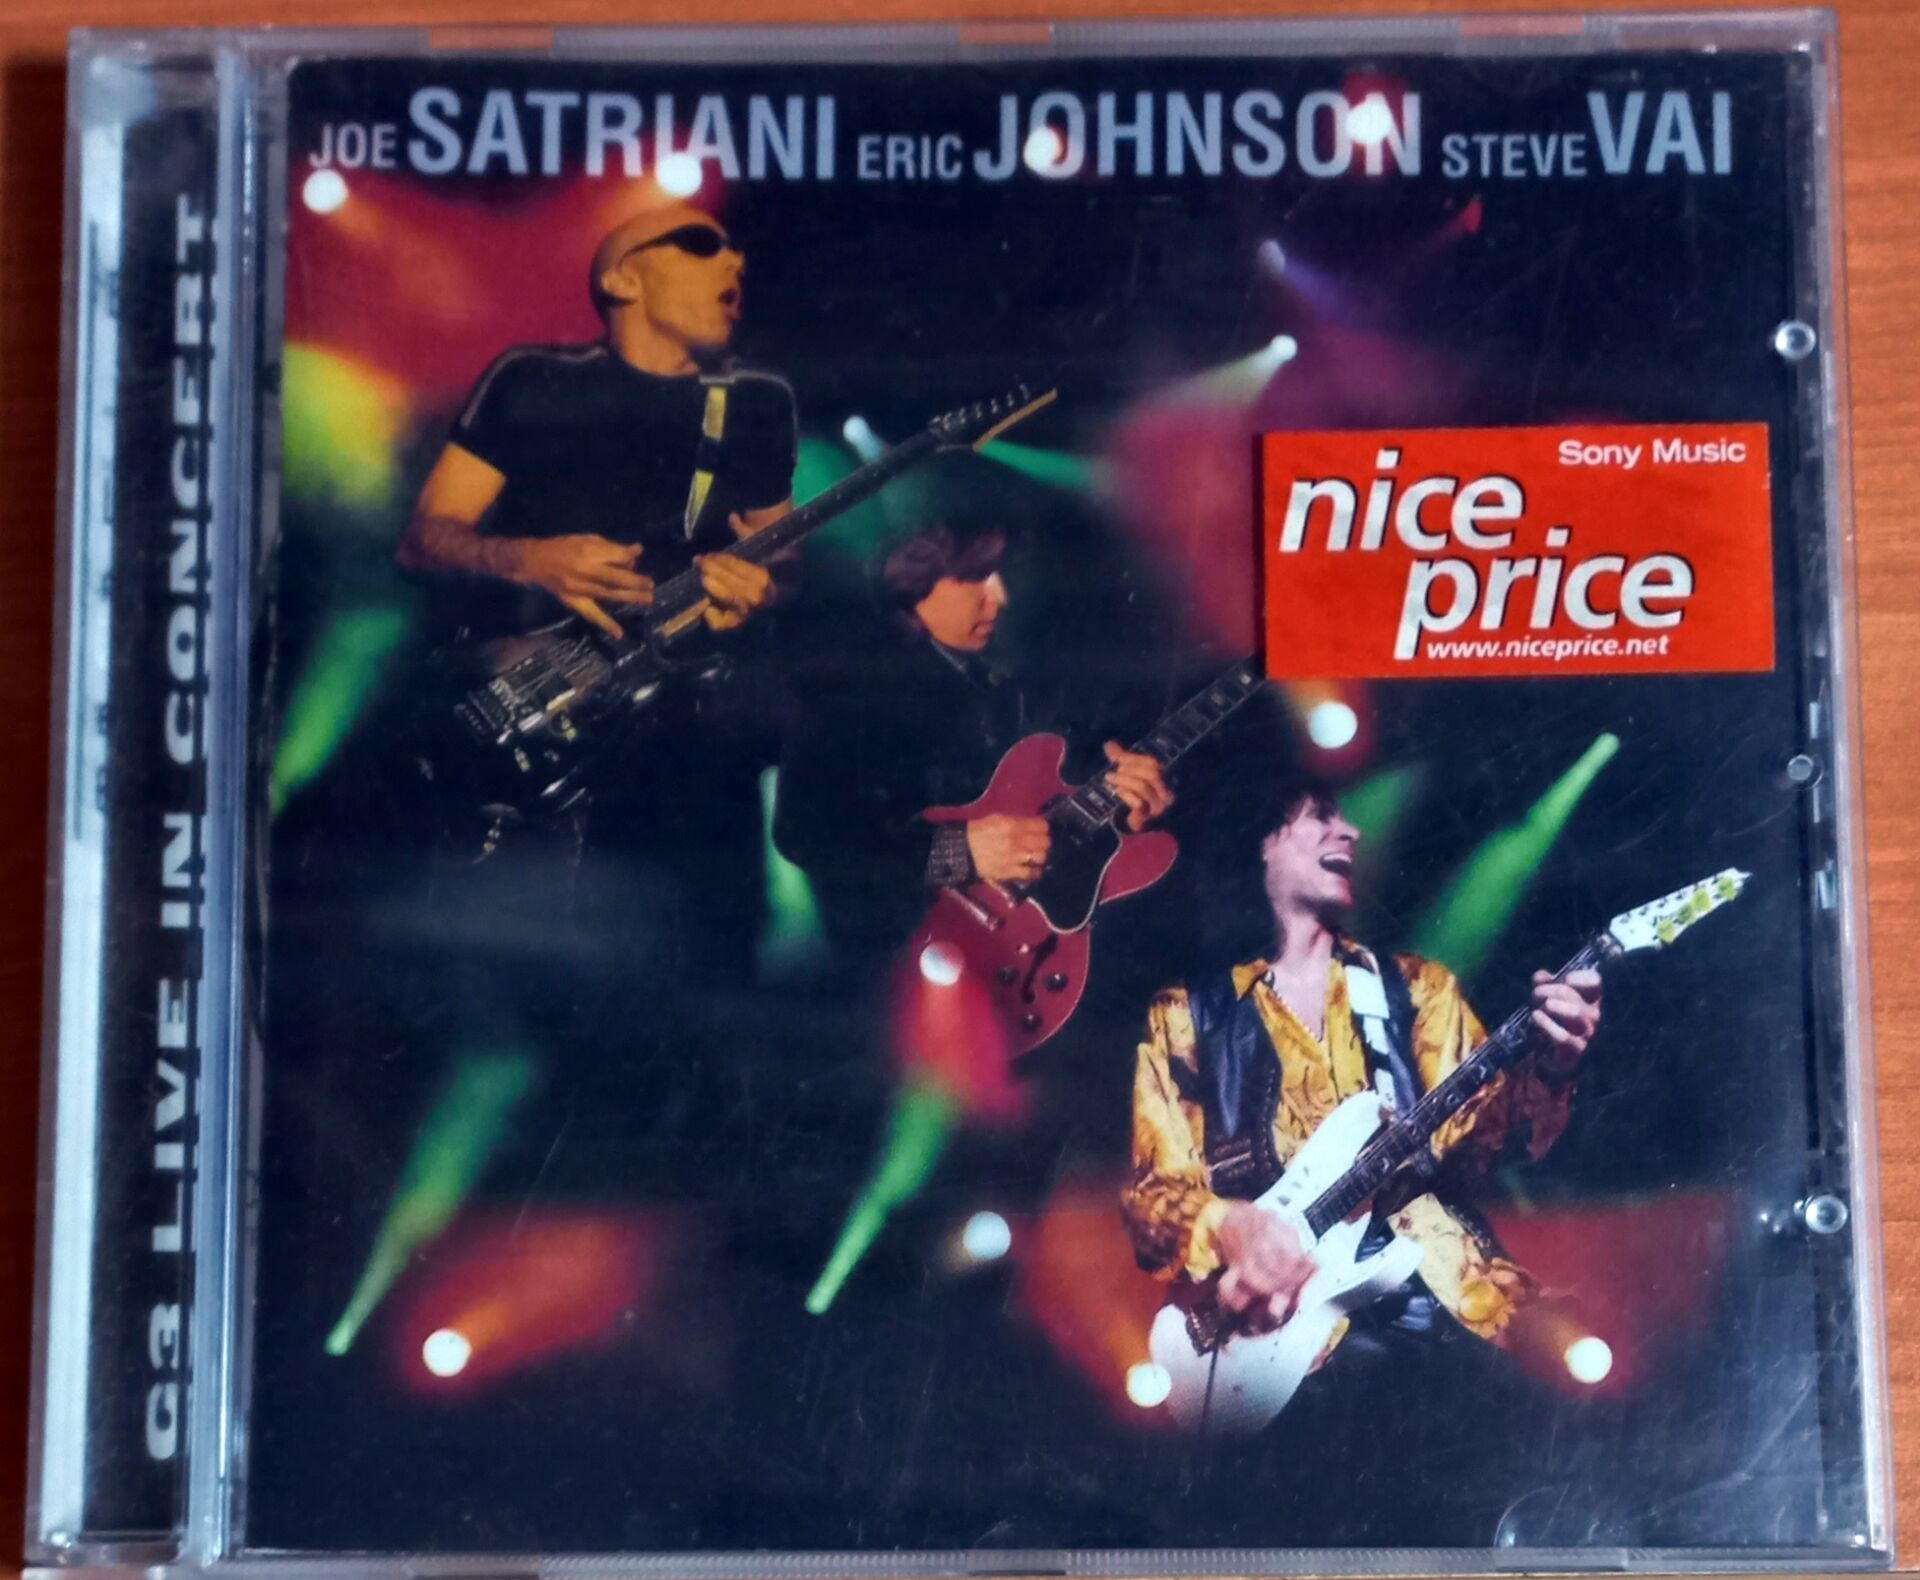 JOE SATRIANI / ERIC JOHNSON / STEVE VAI – G3 LIVE IN CONCERT (1997) CD 2.EL